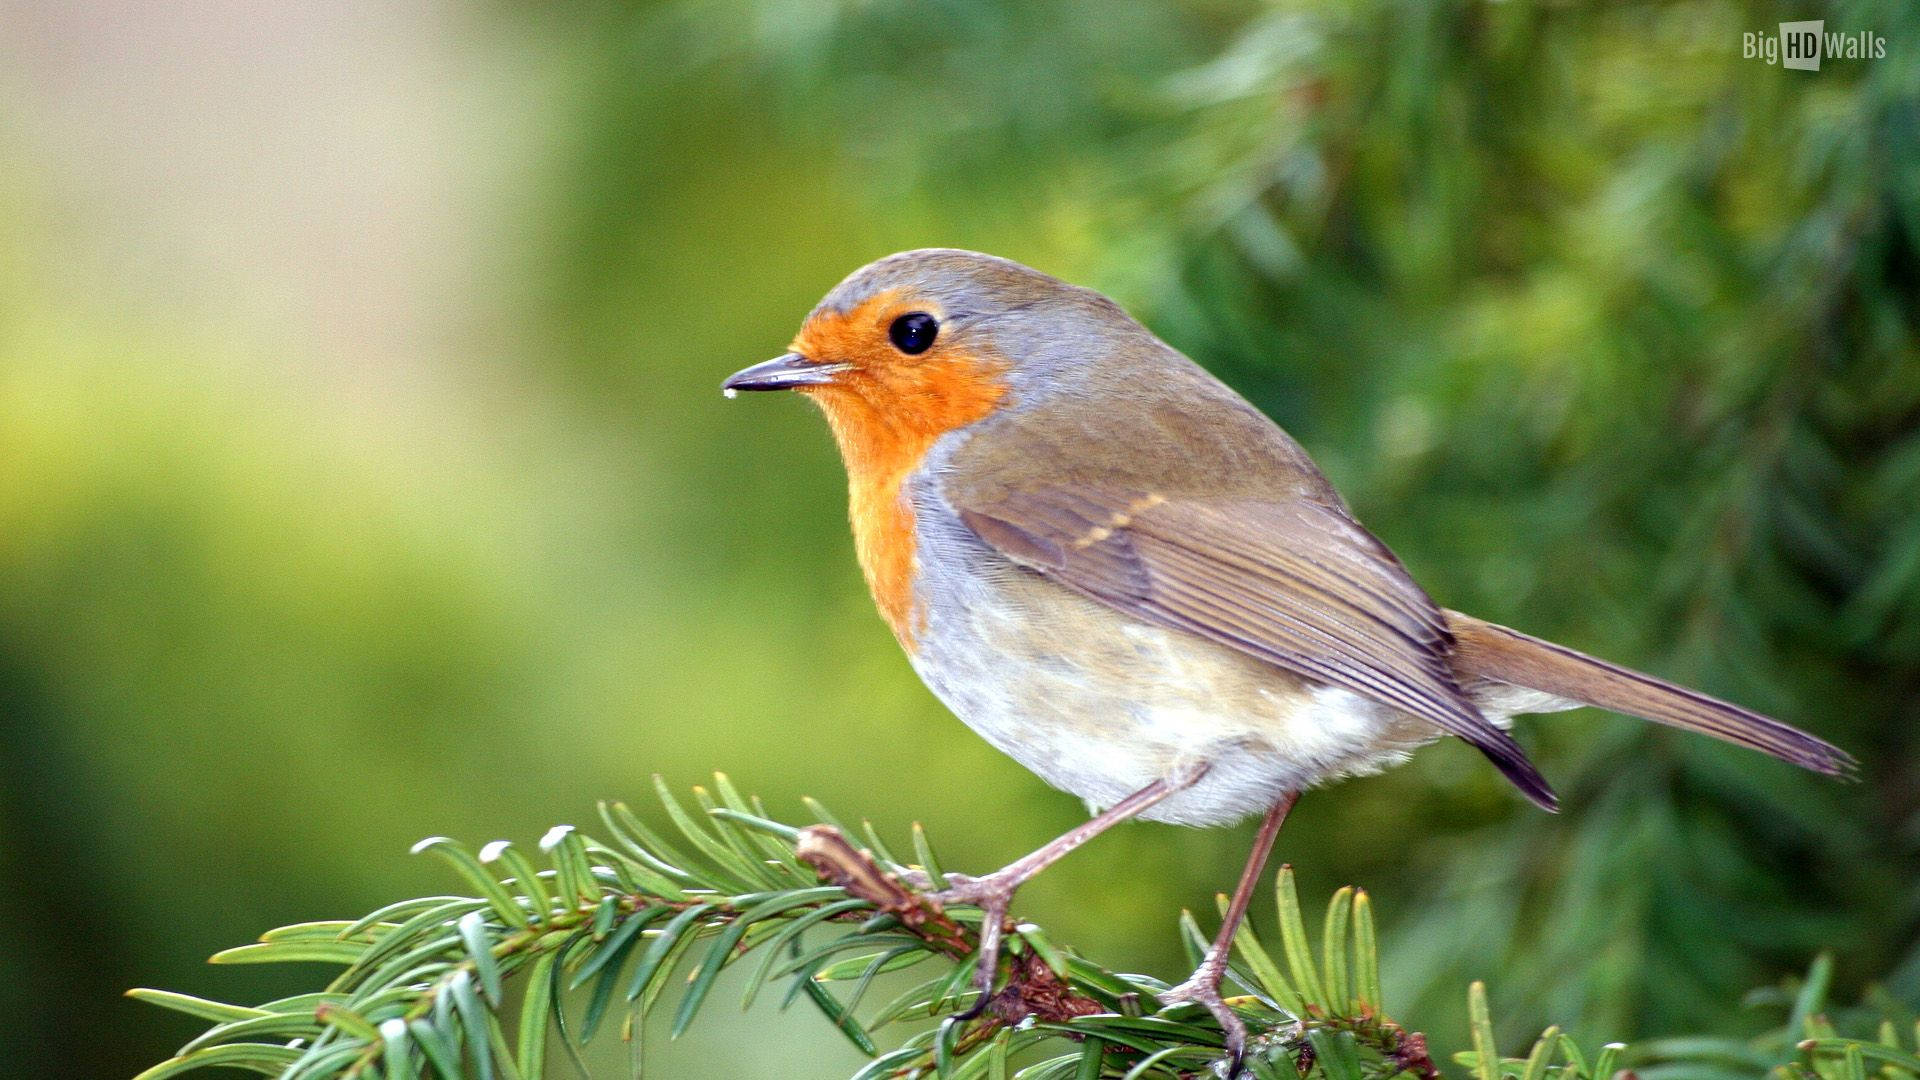 A Robin Bird Sitting On A Pine Tree Branch Wallpaper